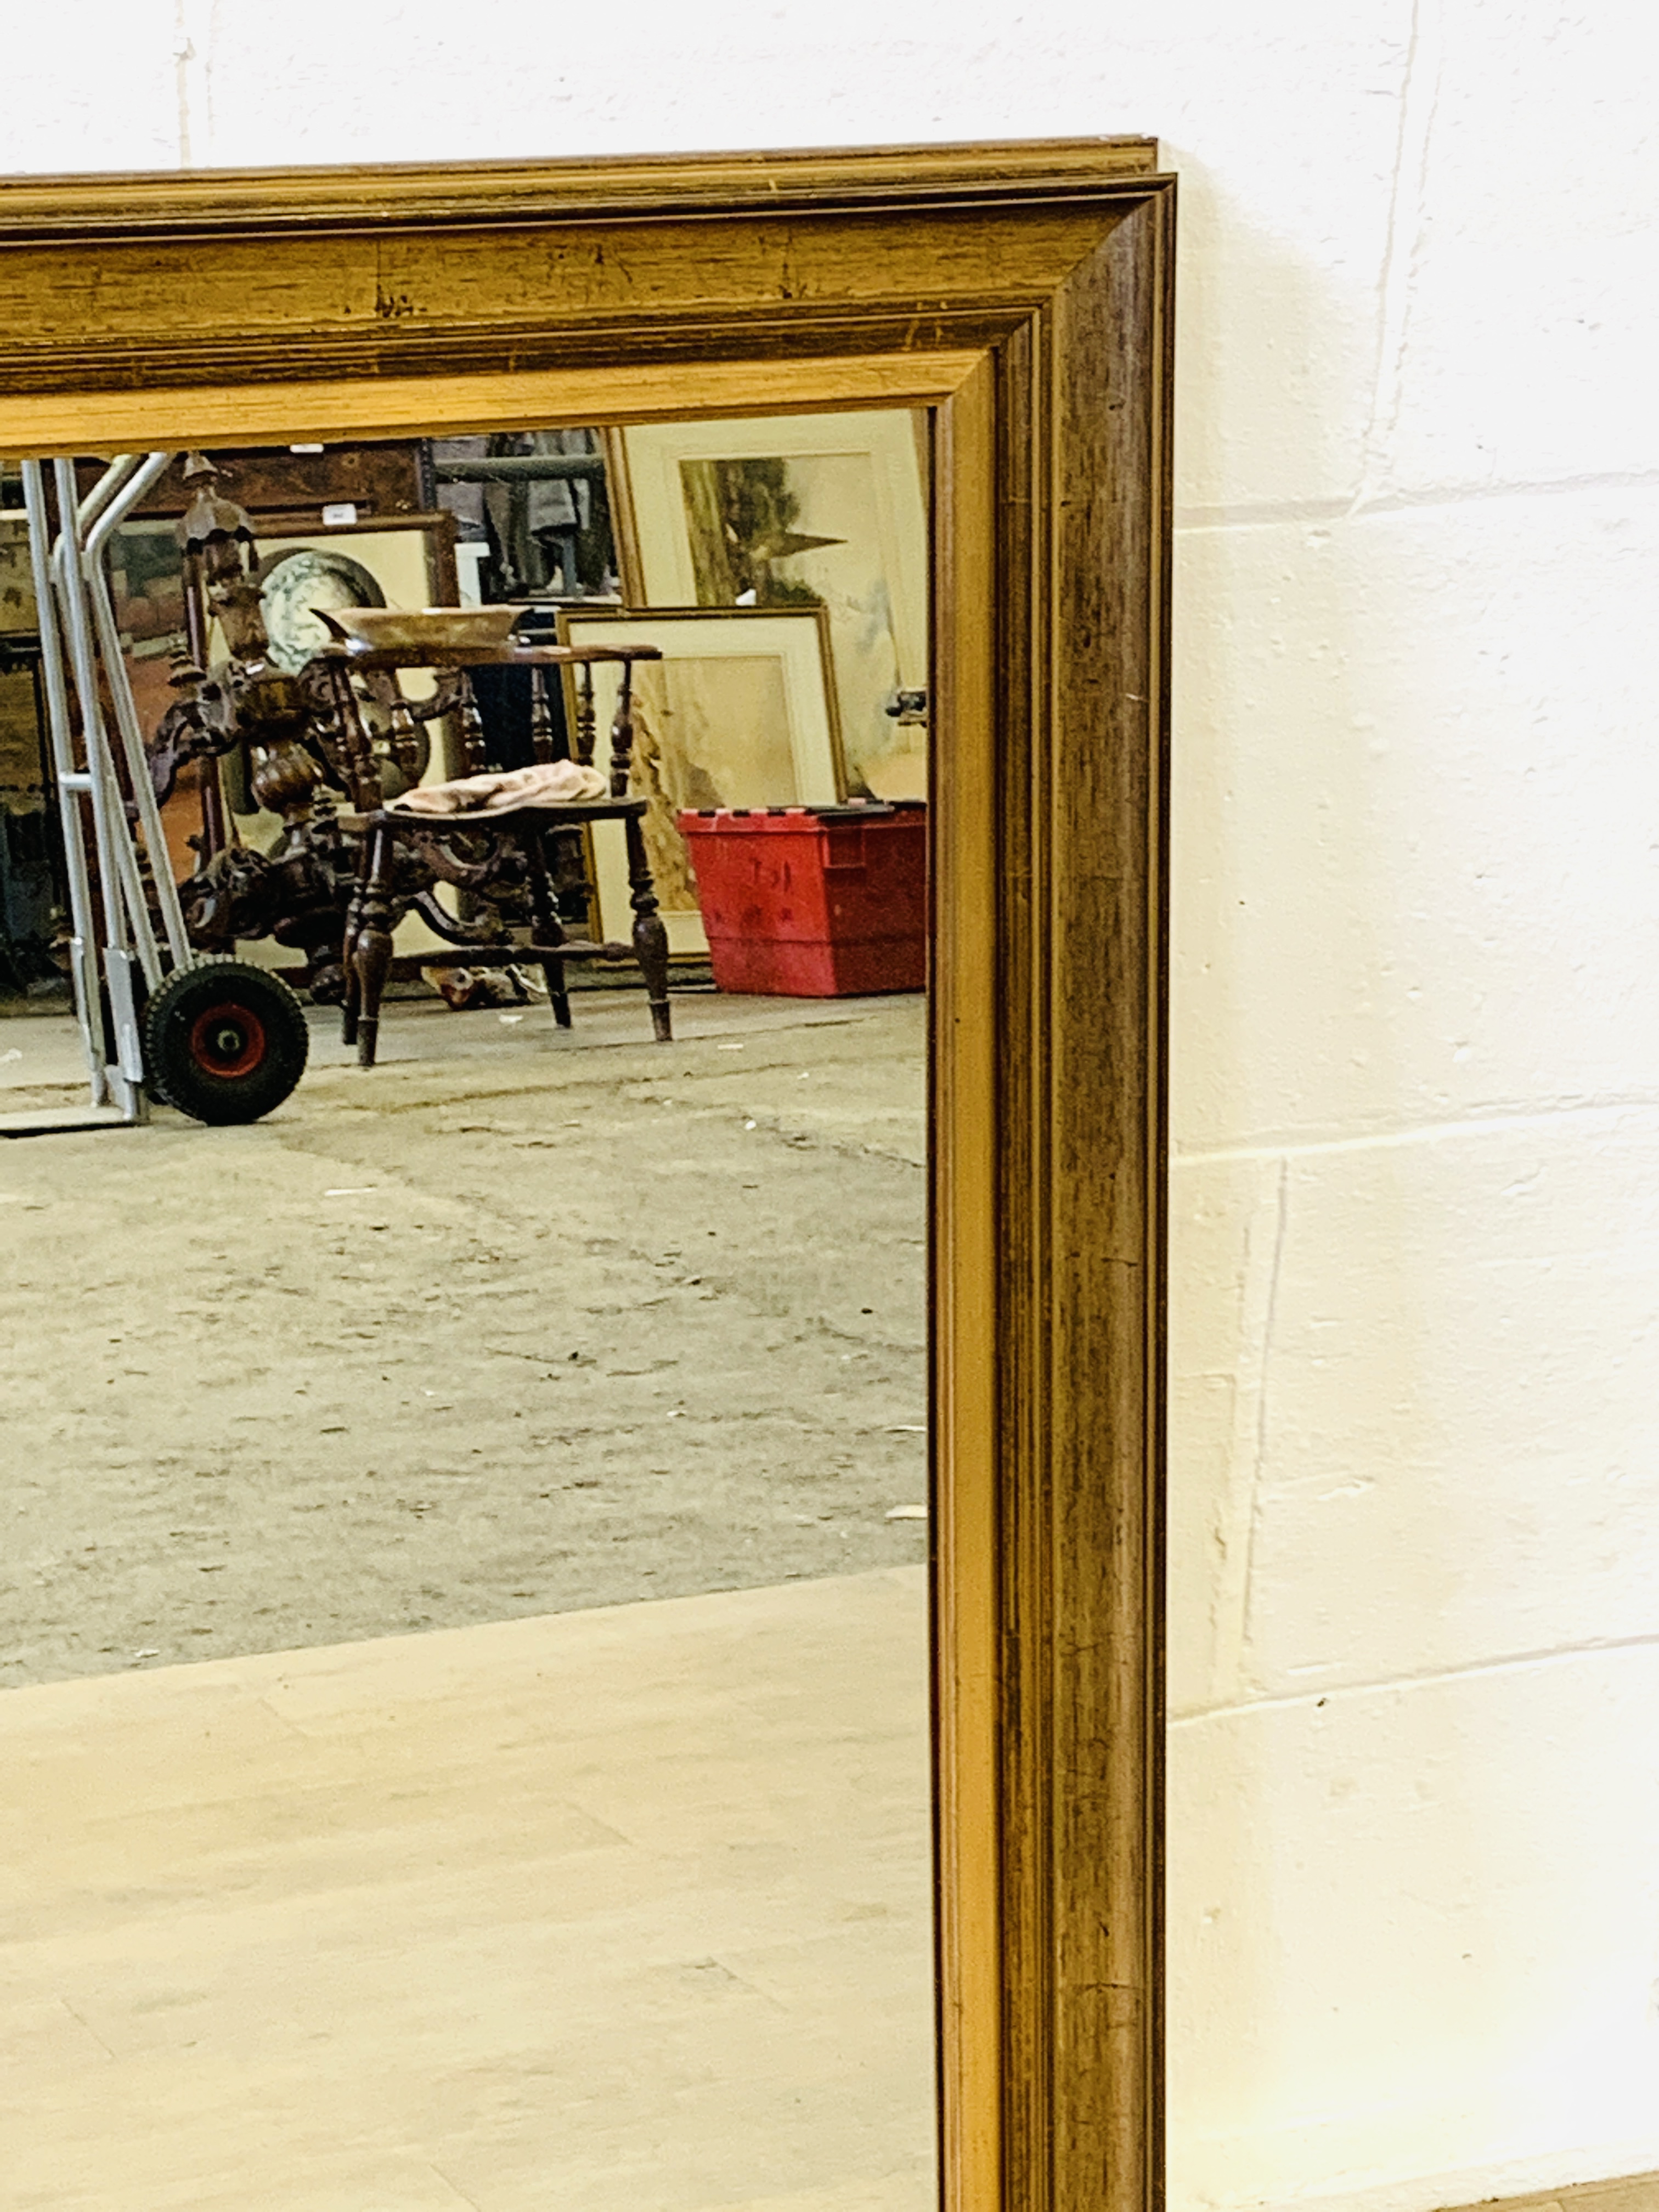 Gilt frame wall mirror - Image 3 of 4